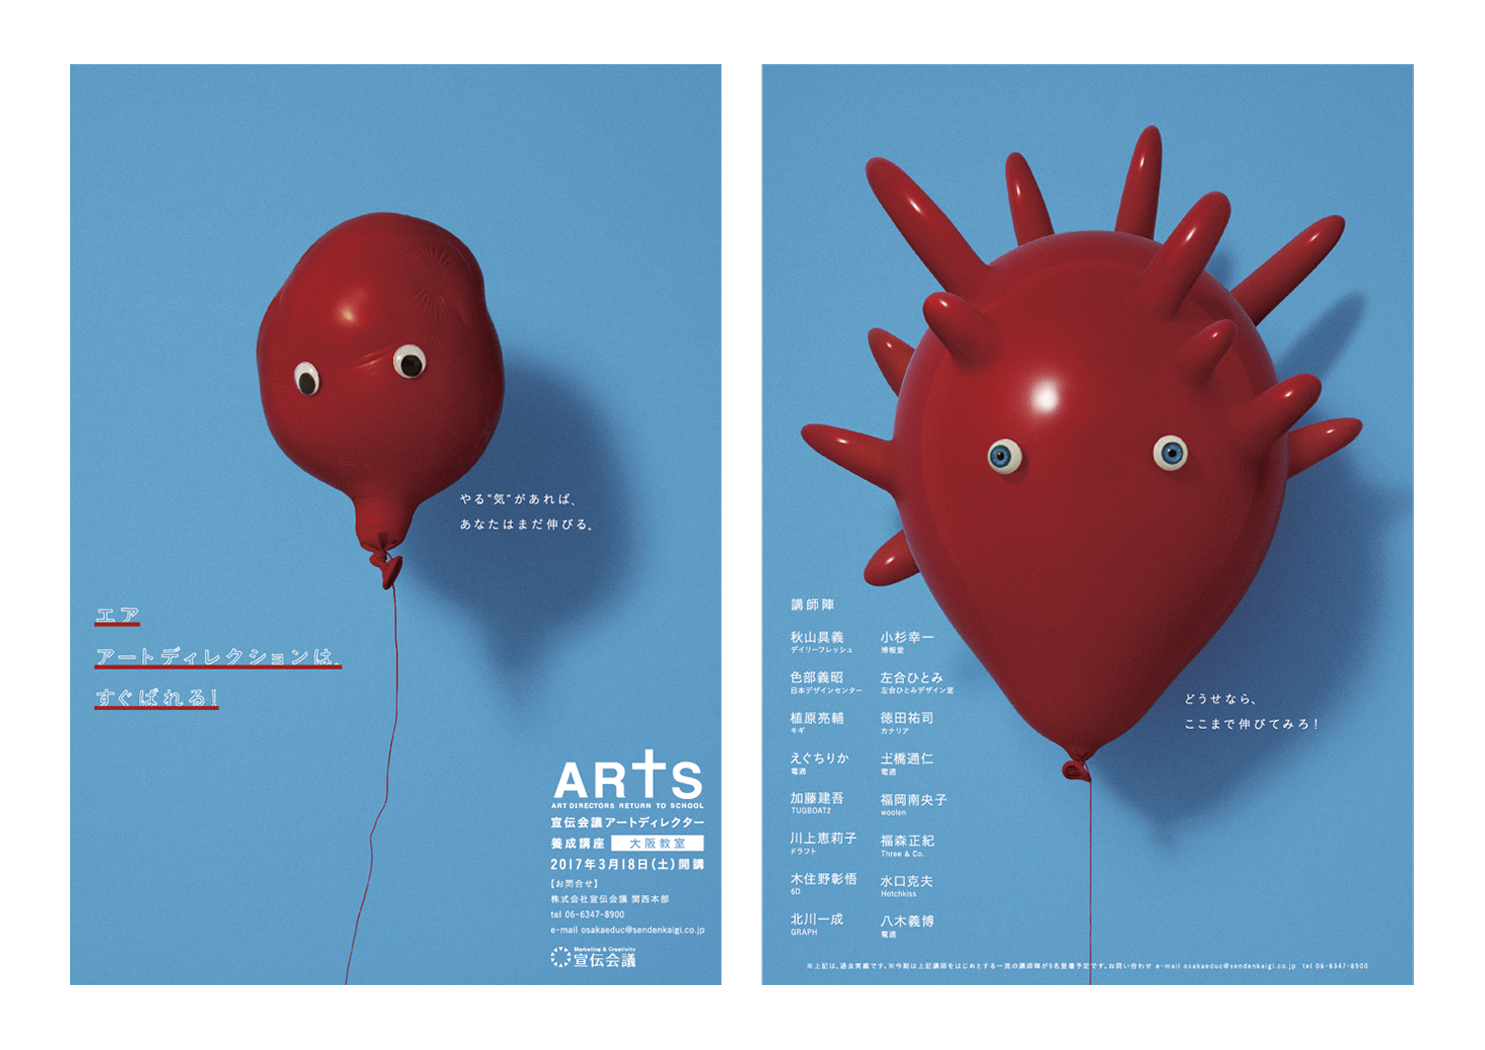 sendenkaigi ARTS 2017 pamphlet